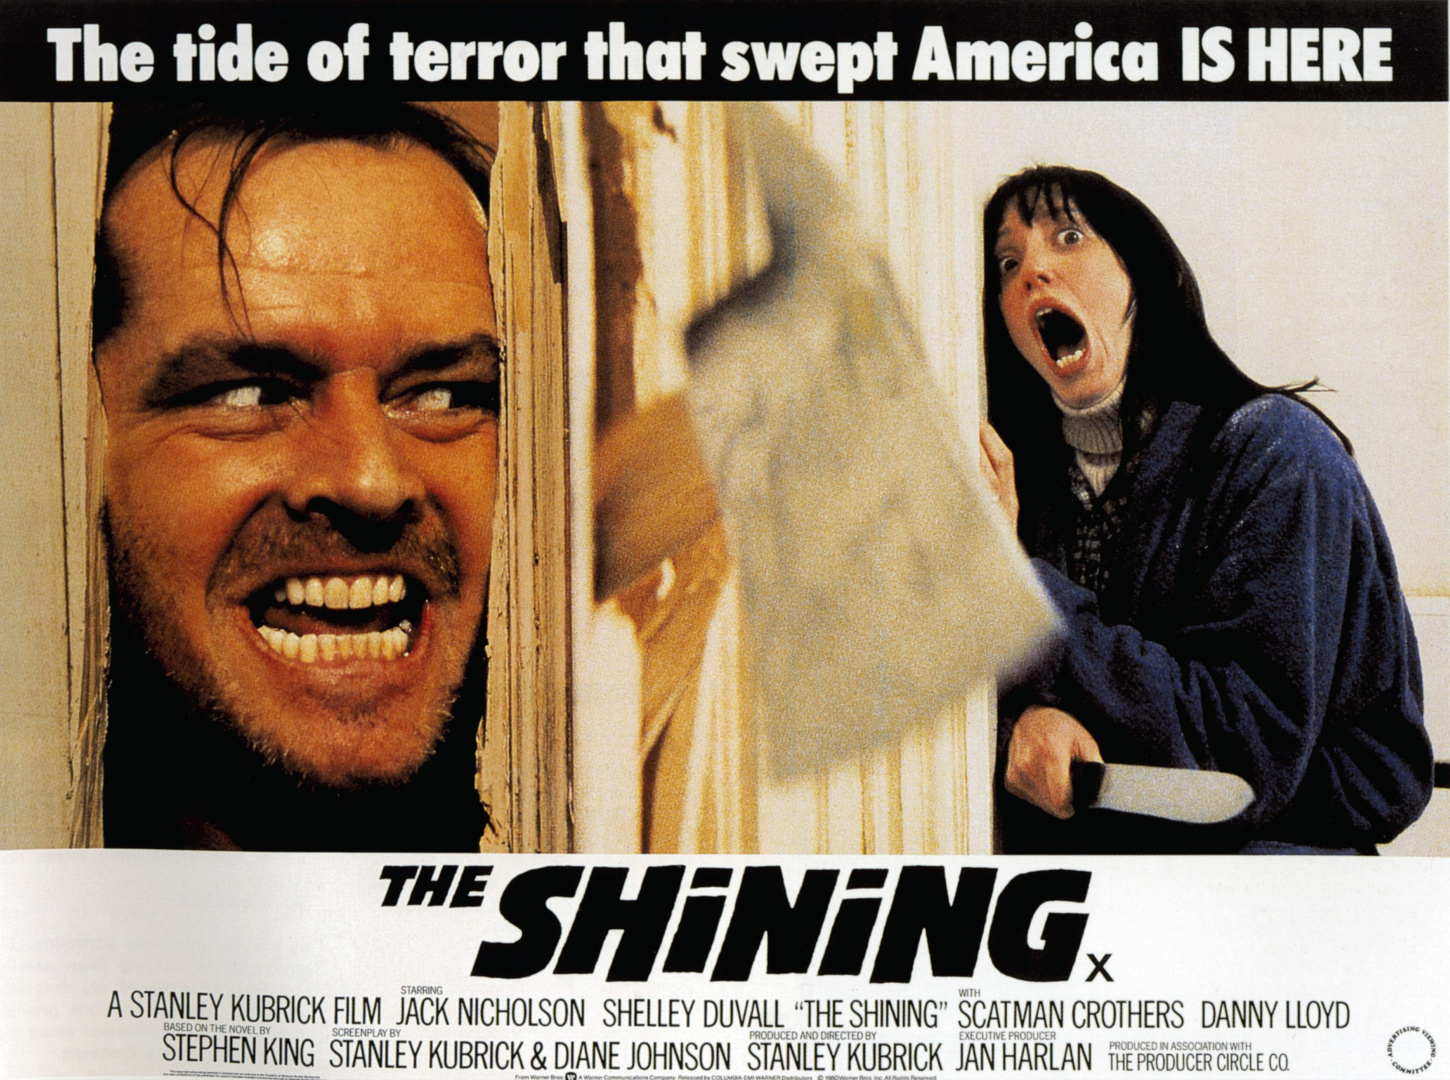 7. Shelley Duvall: Wendy Torrance en “The Shining” (El resplandor)